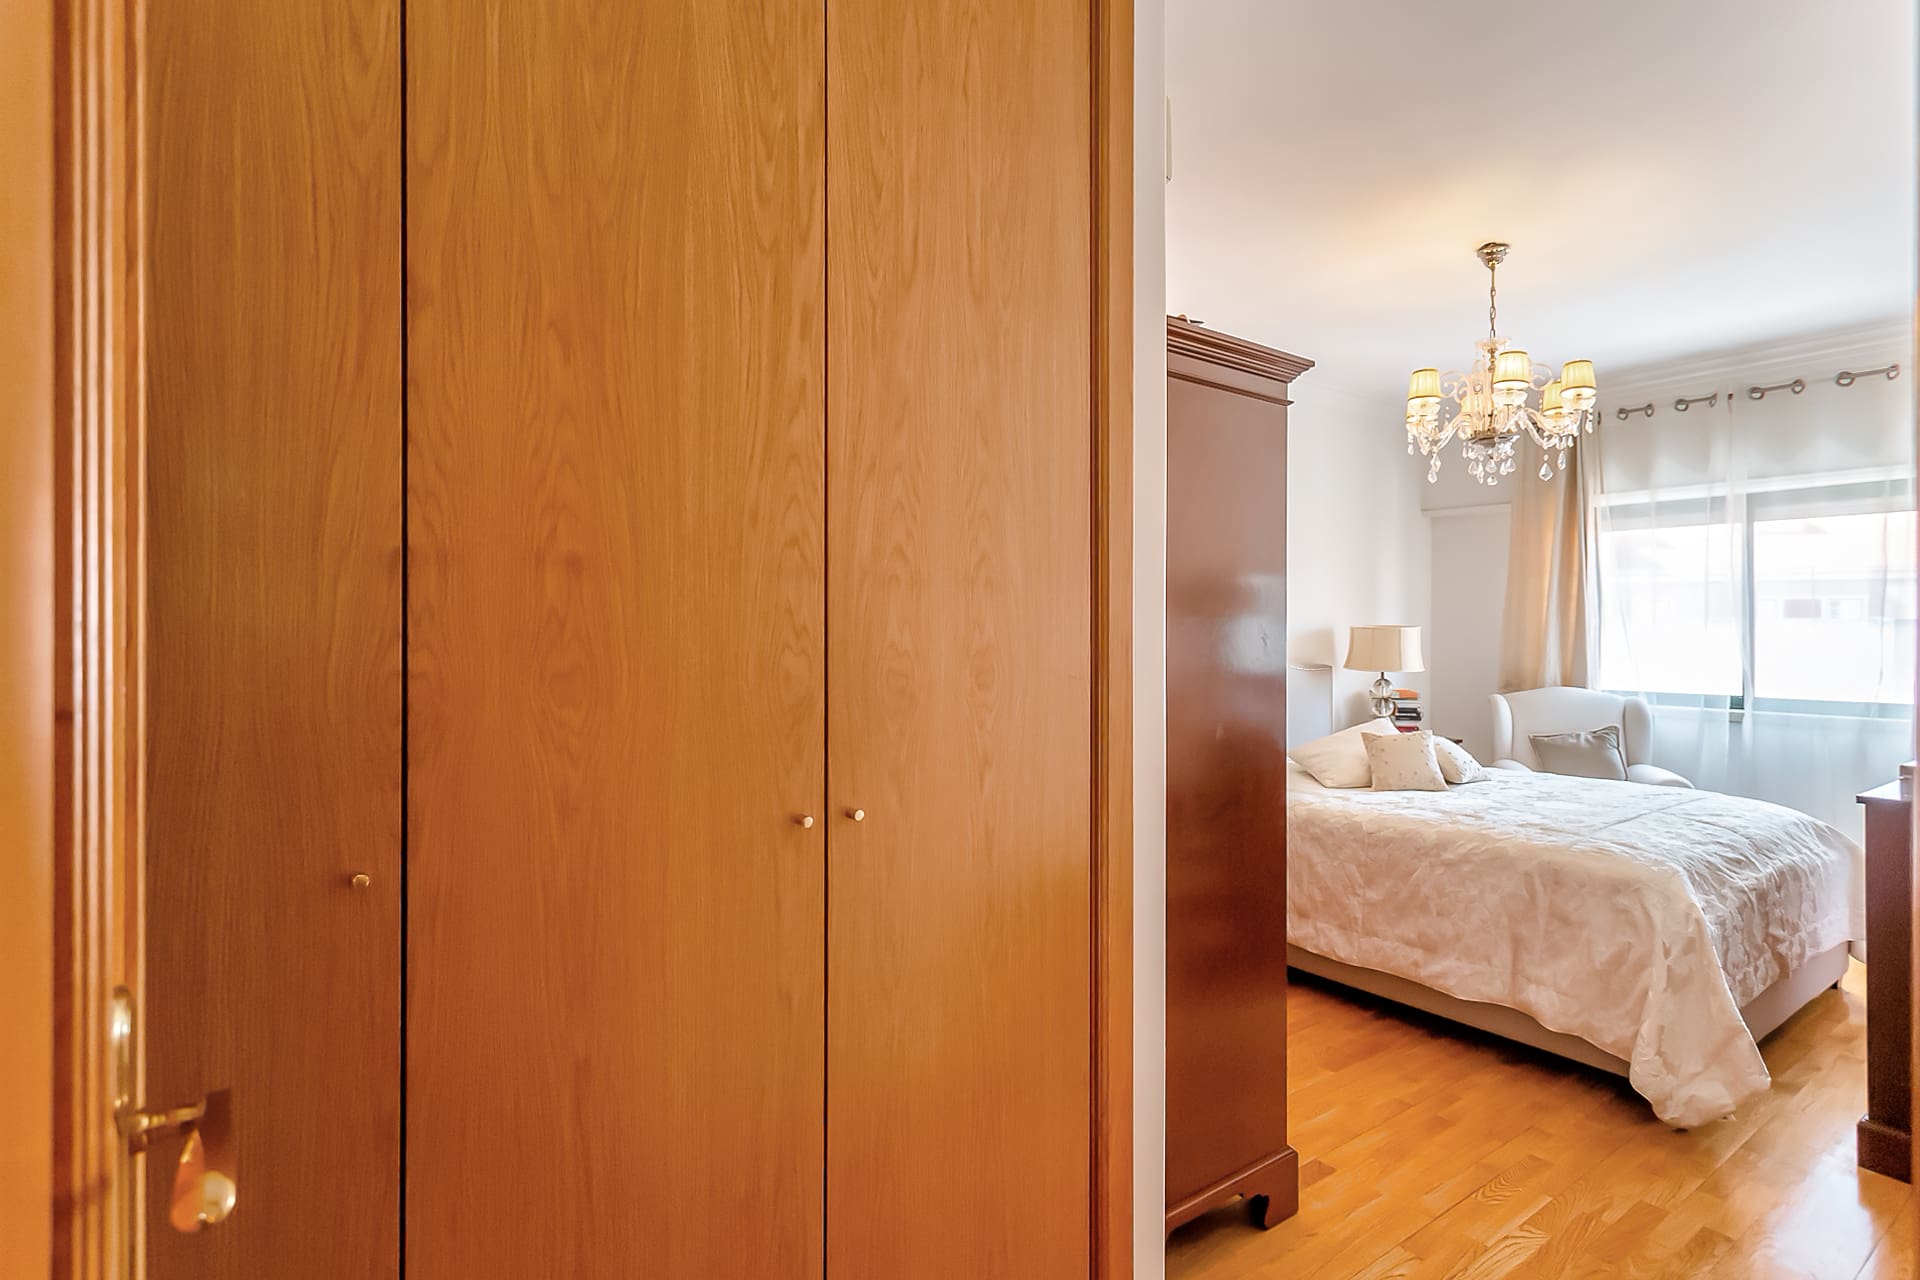 Bedroom with built-in cupboards